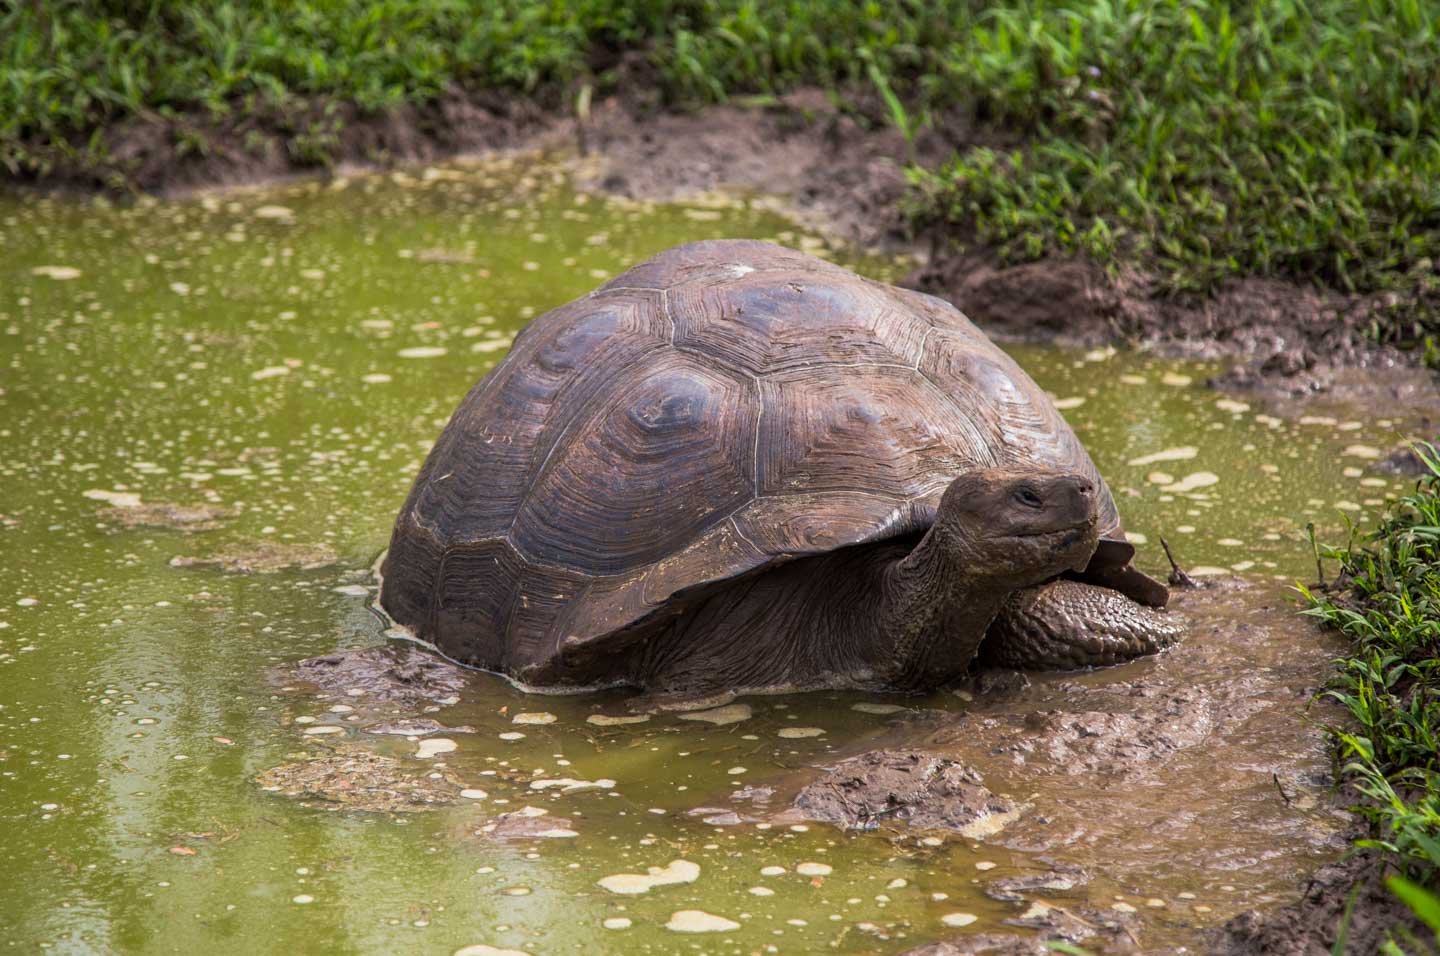 Giant tortoise chilling in the pond, Reserva El Chato, Santa Cruz Island, Galápagos Islands, Ecuador